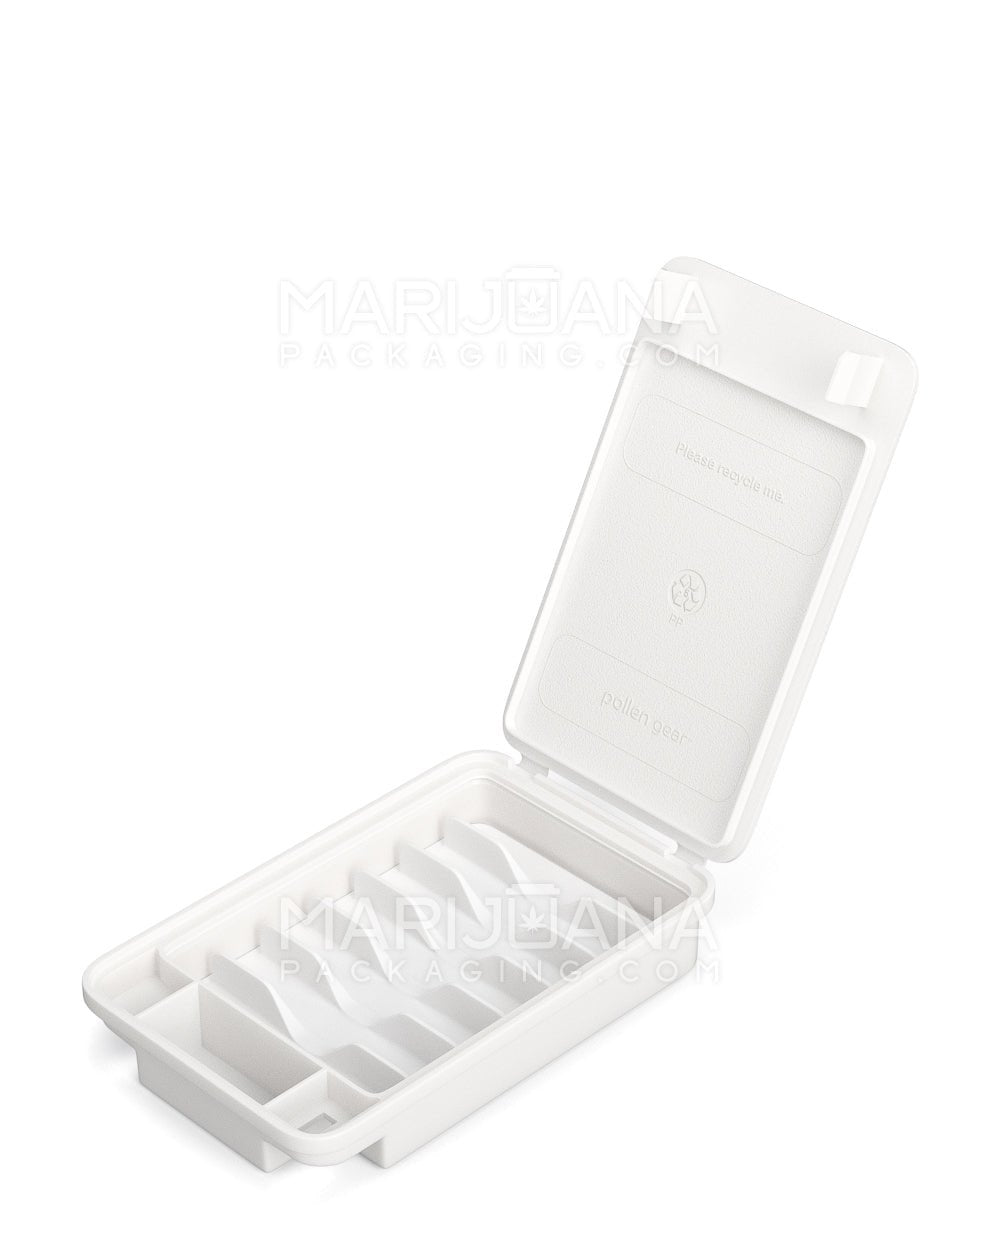 POLLEN GEAR | SnapTech Medium White Plastic Insert Tray | 25mm - Foam - 2000 Count - 6